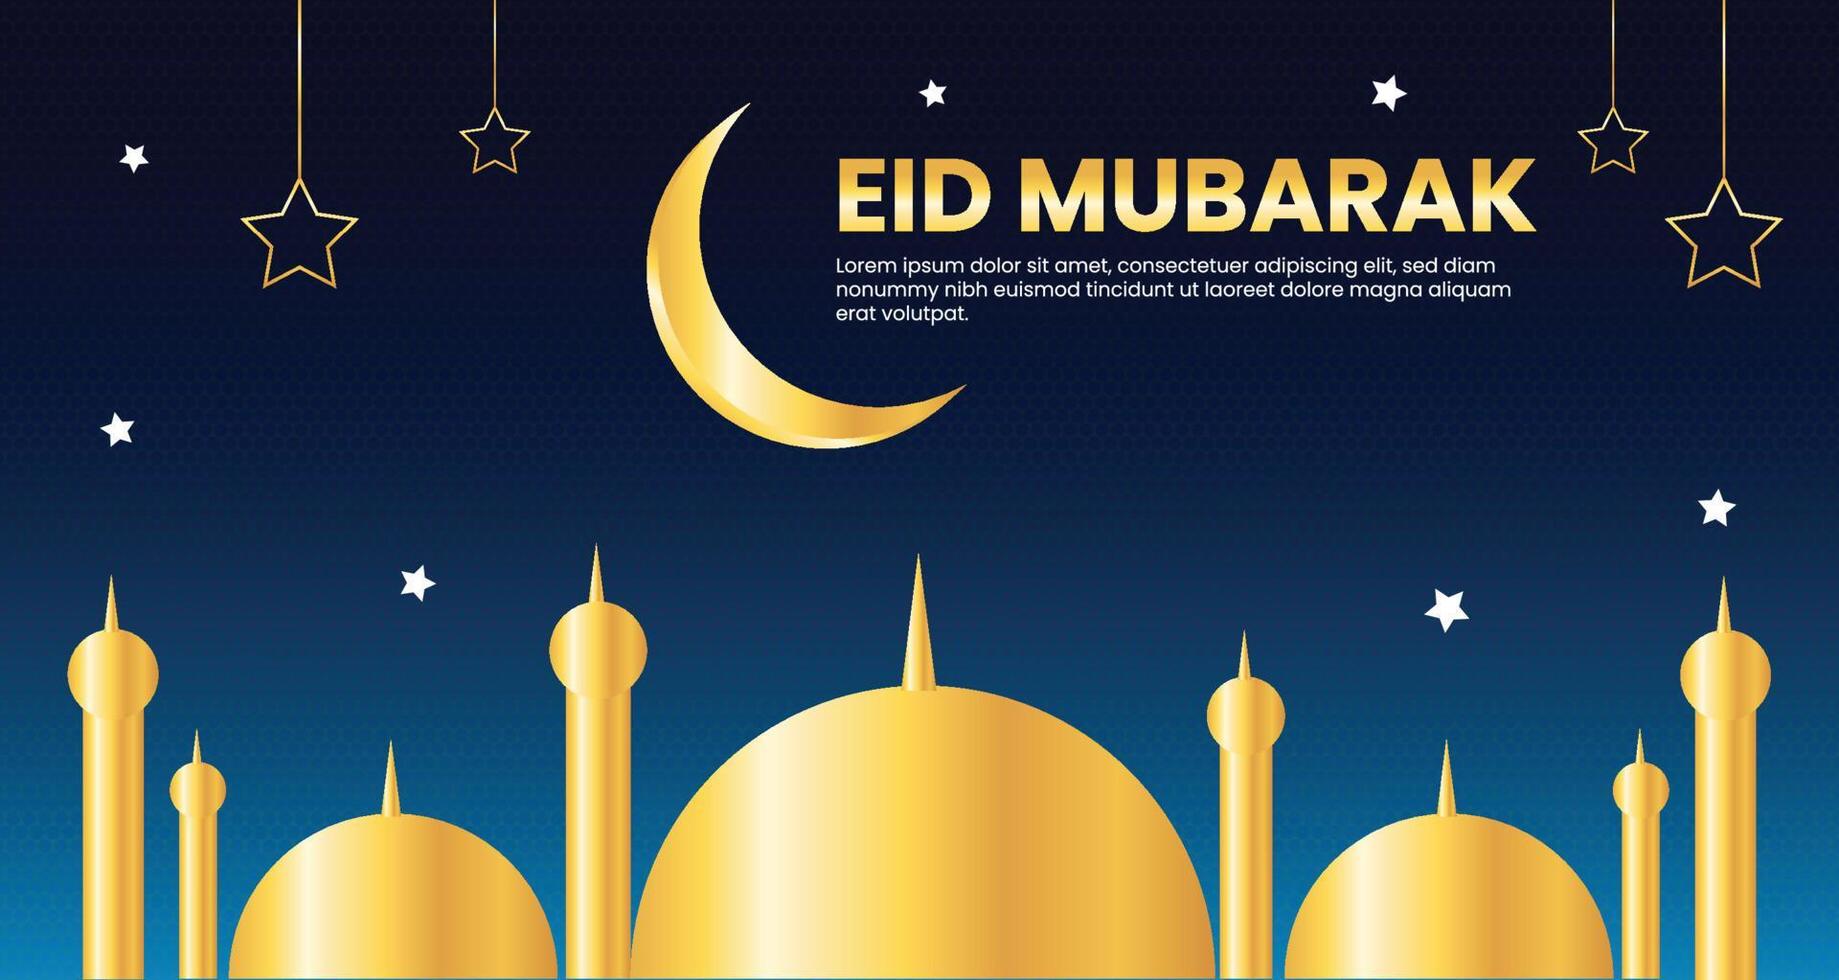 Eid Mubarak Background Design Template vector